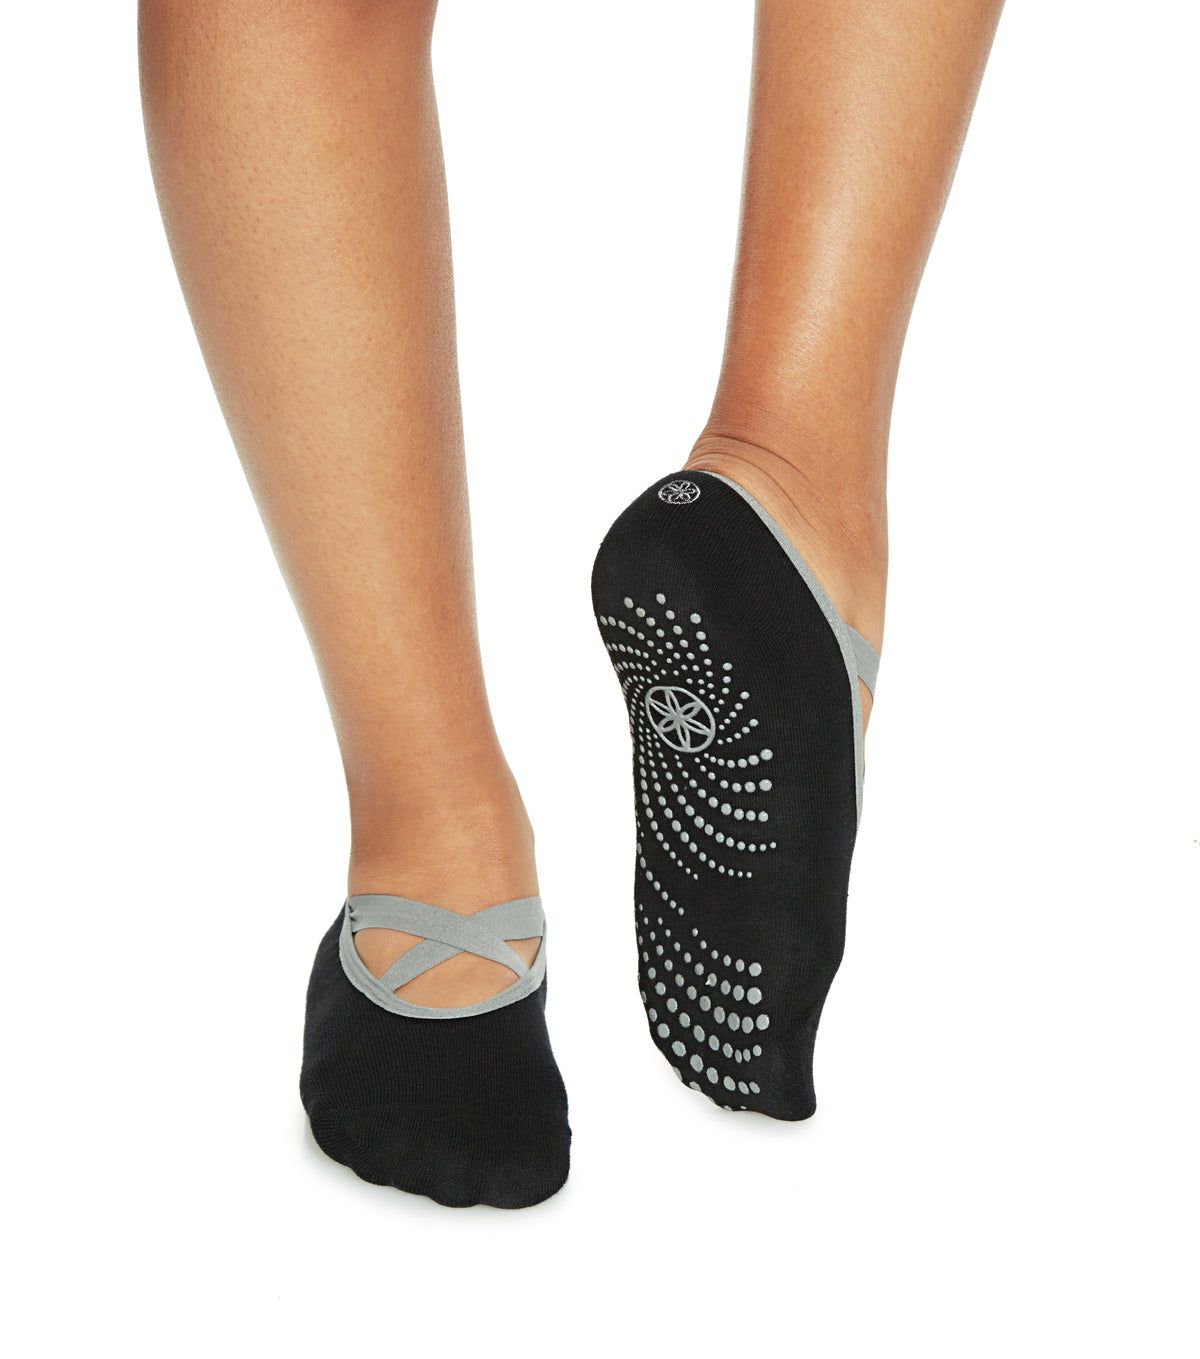 TAVI NOIR Chloe Fashion Criss-Cross Grip Socks for Barre, Pilates and Yoga